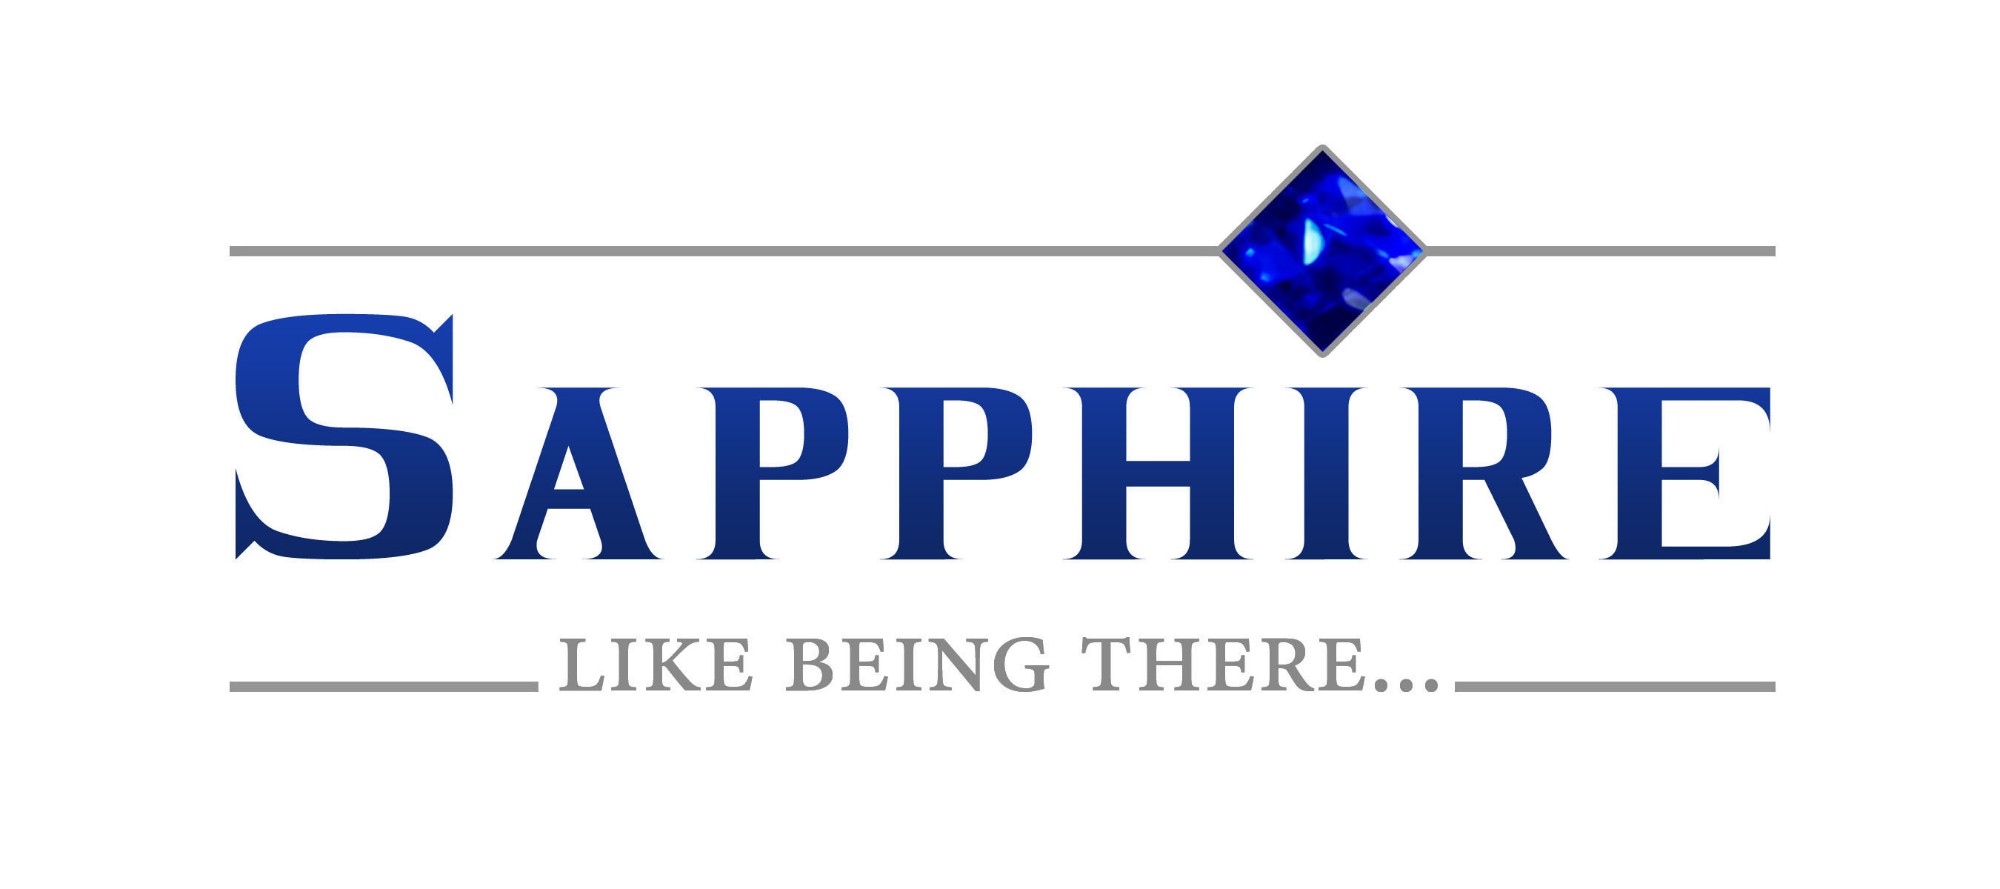 Фк сапфир. Сапфир лого. Sapphire плагин логотип. Saphir логотип. Сапфирова эмблема.